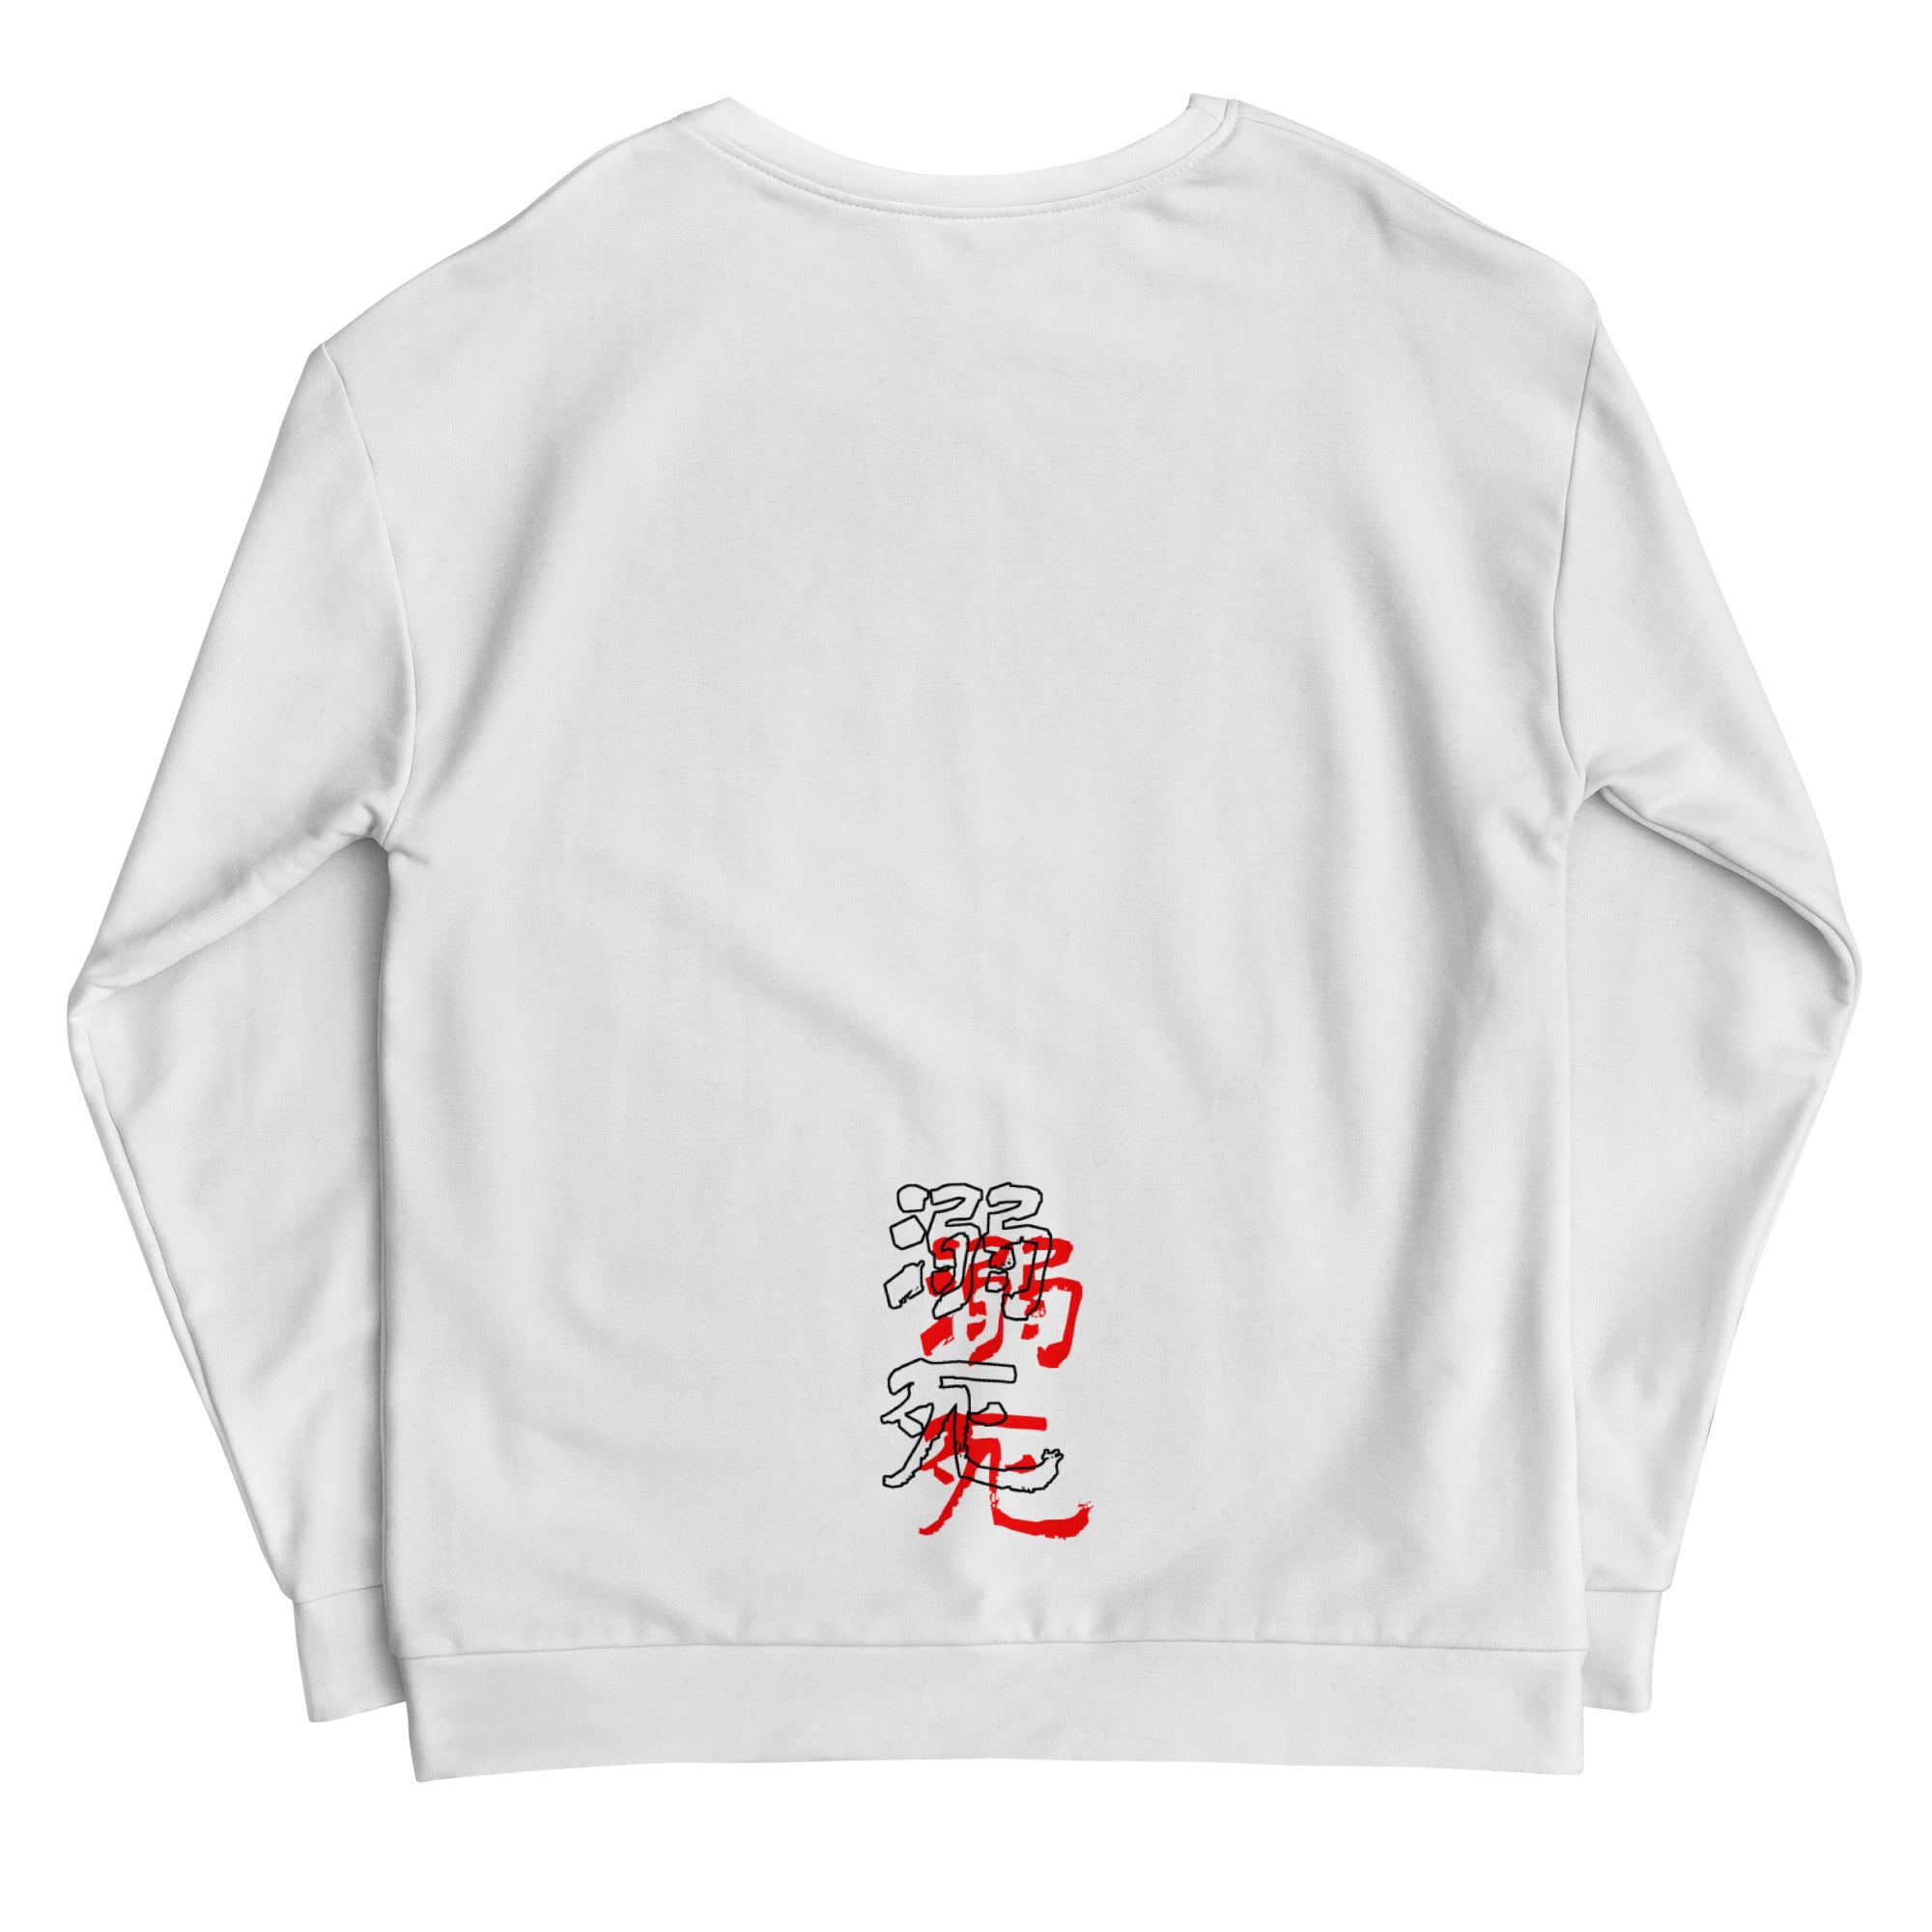 all-over-print-recycled-unisex-sweatshirt-white-back-66453daeccdc9.jpg